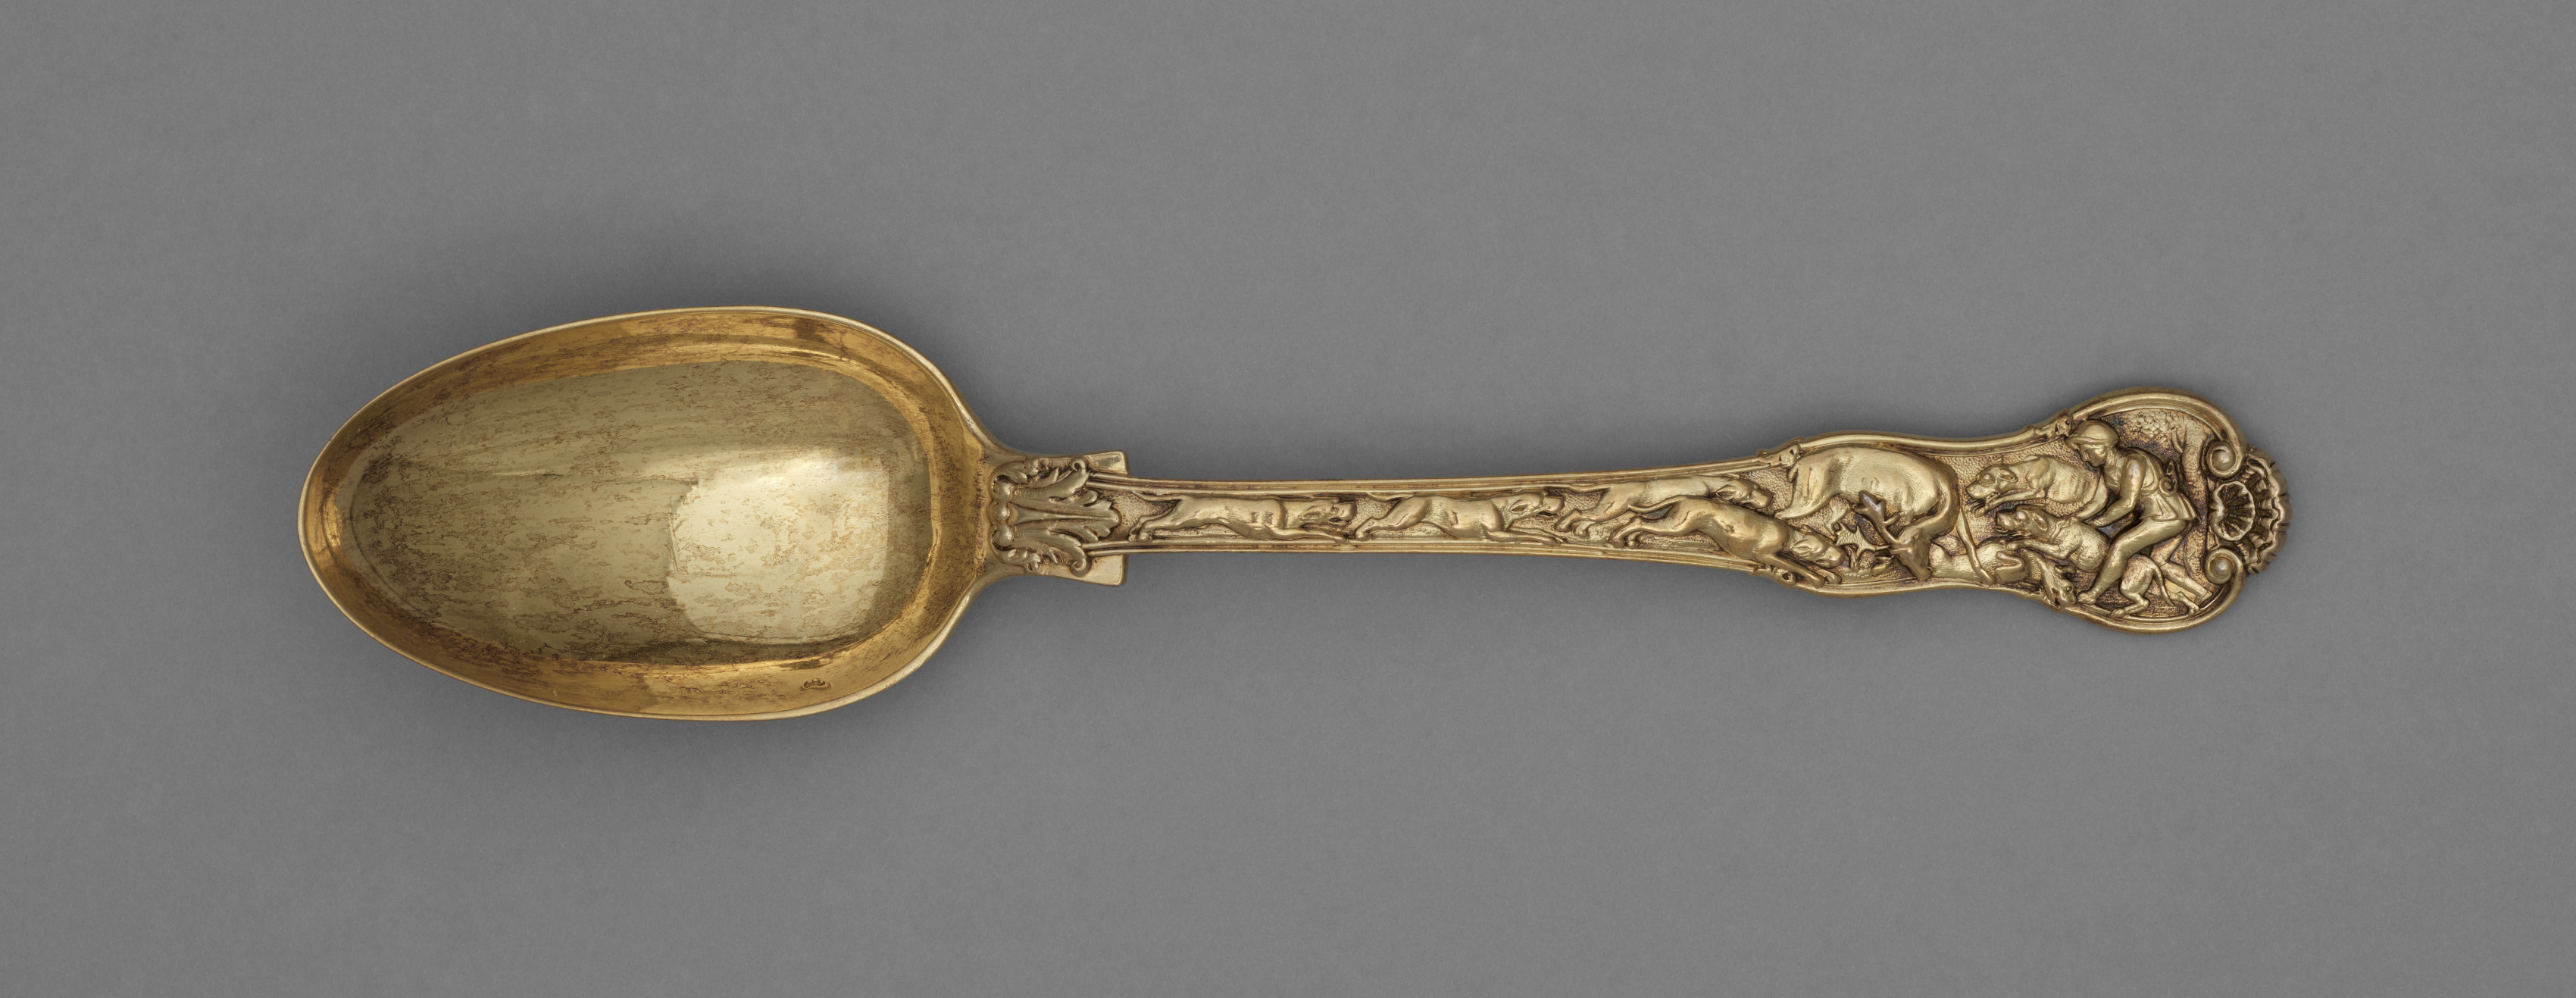 Gilt silver dessert spoon featuring a hunting scene, British, c. 1822.jpg